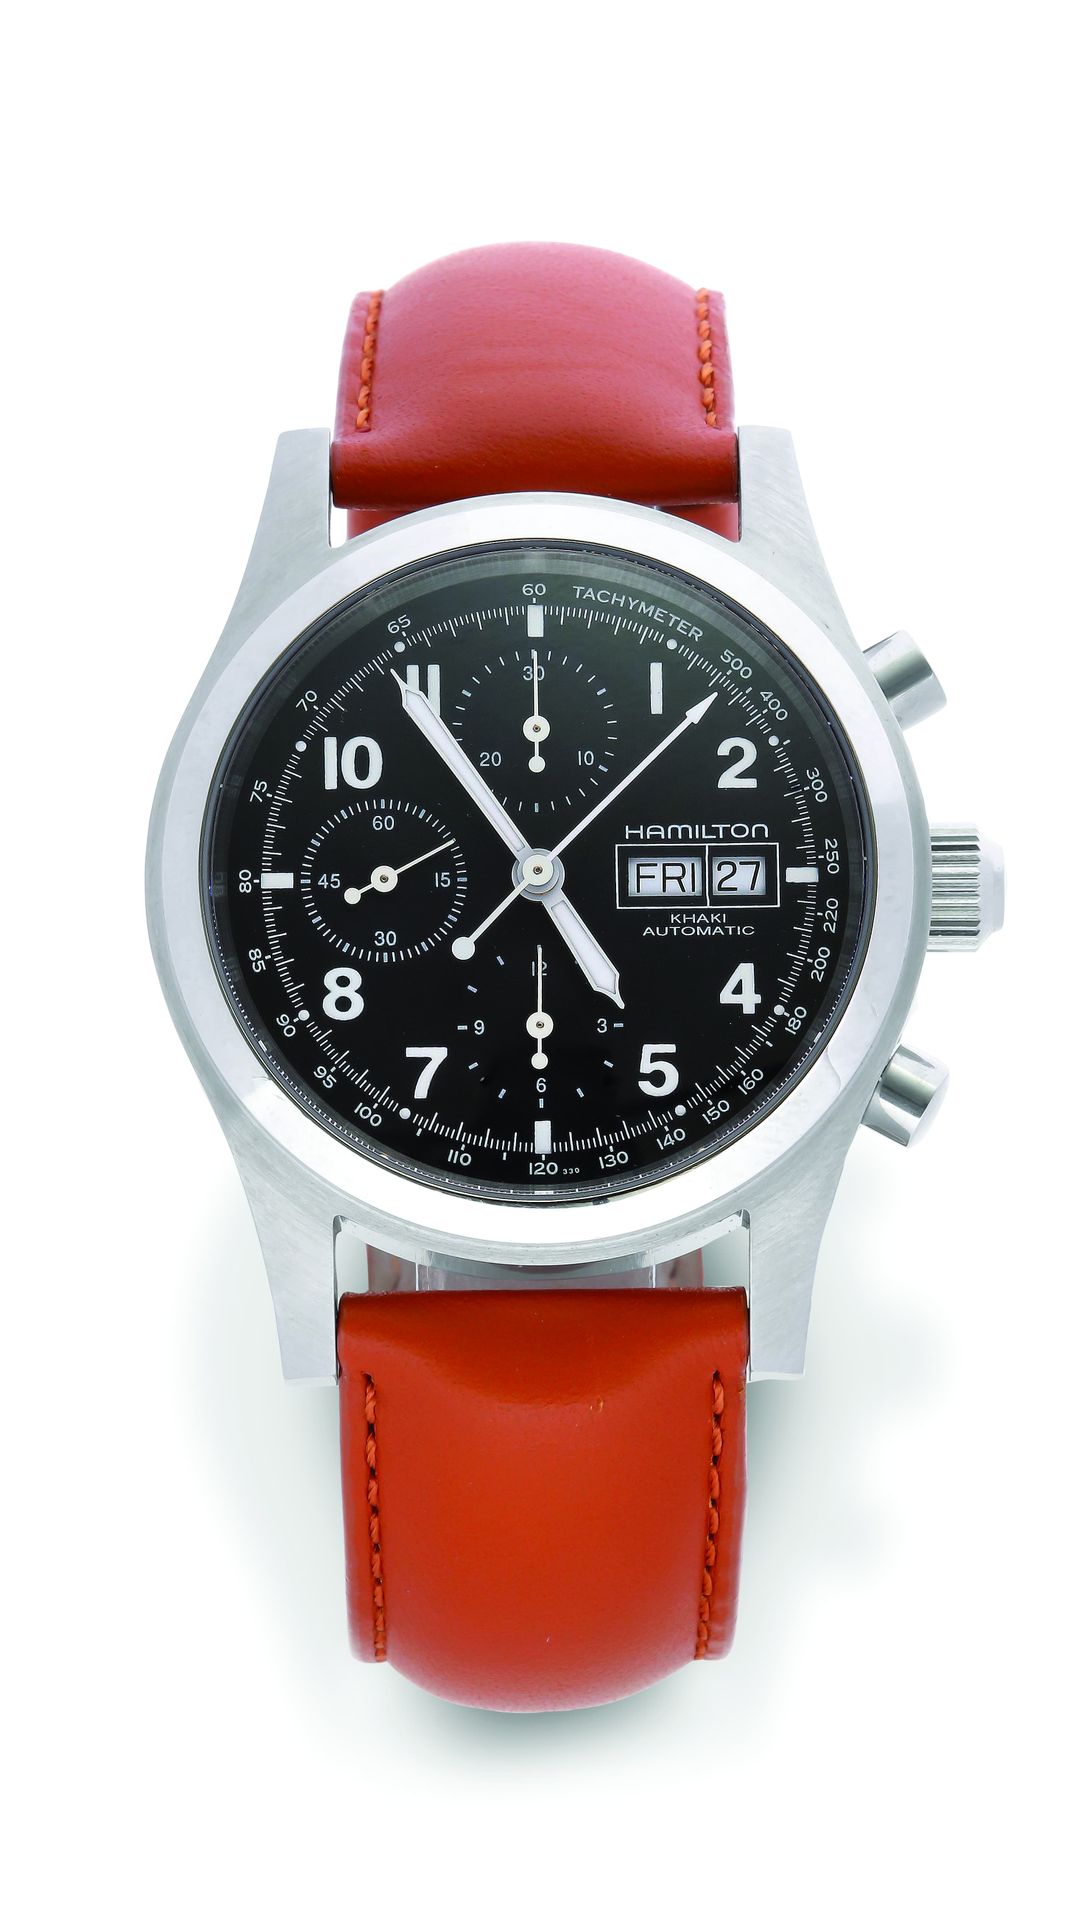 HAMILTON Khaki chronograph
Steel sports chronograph watch with automatic movemen&hellip;